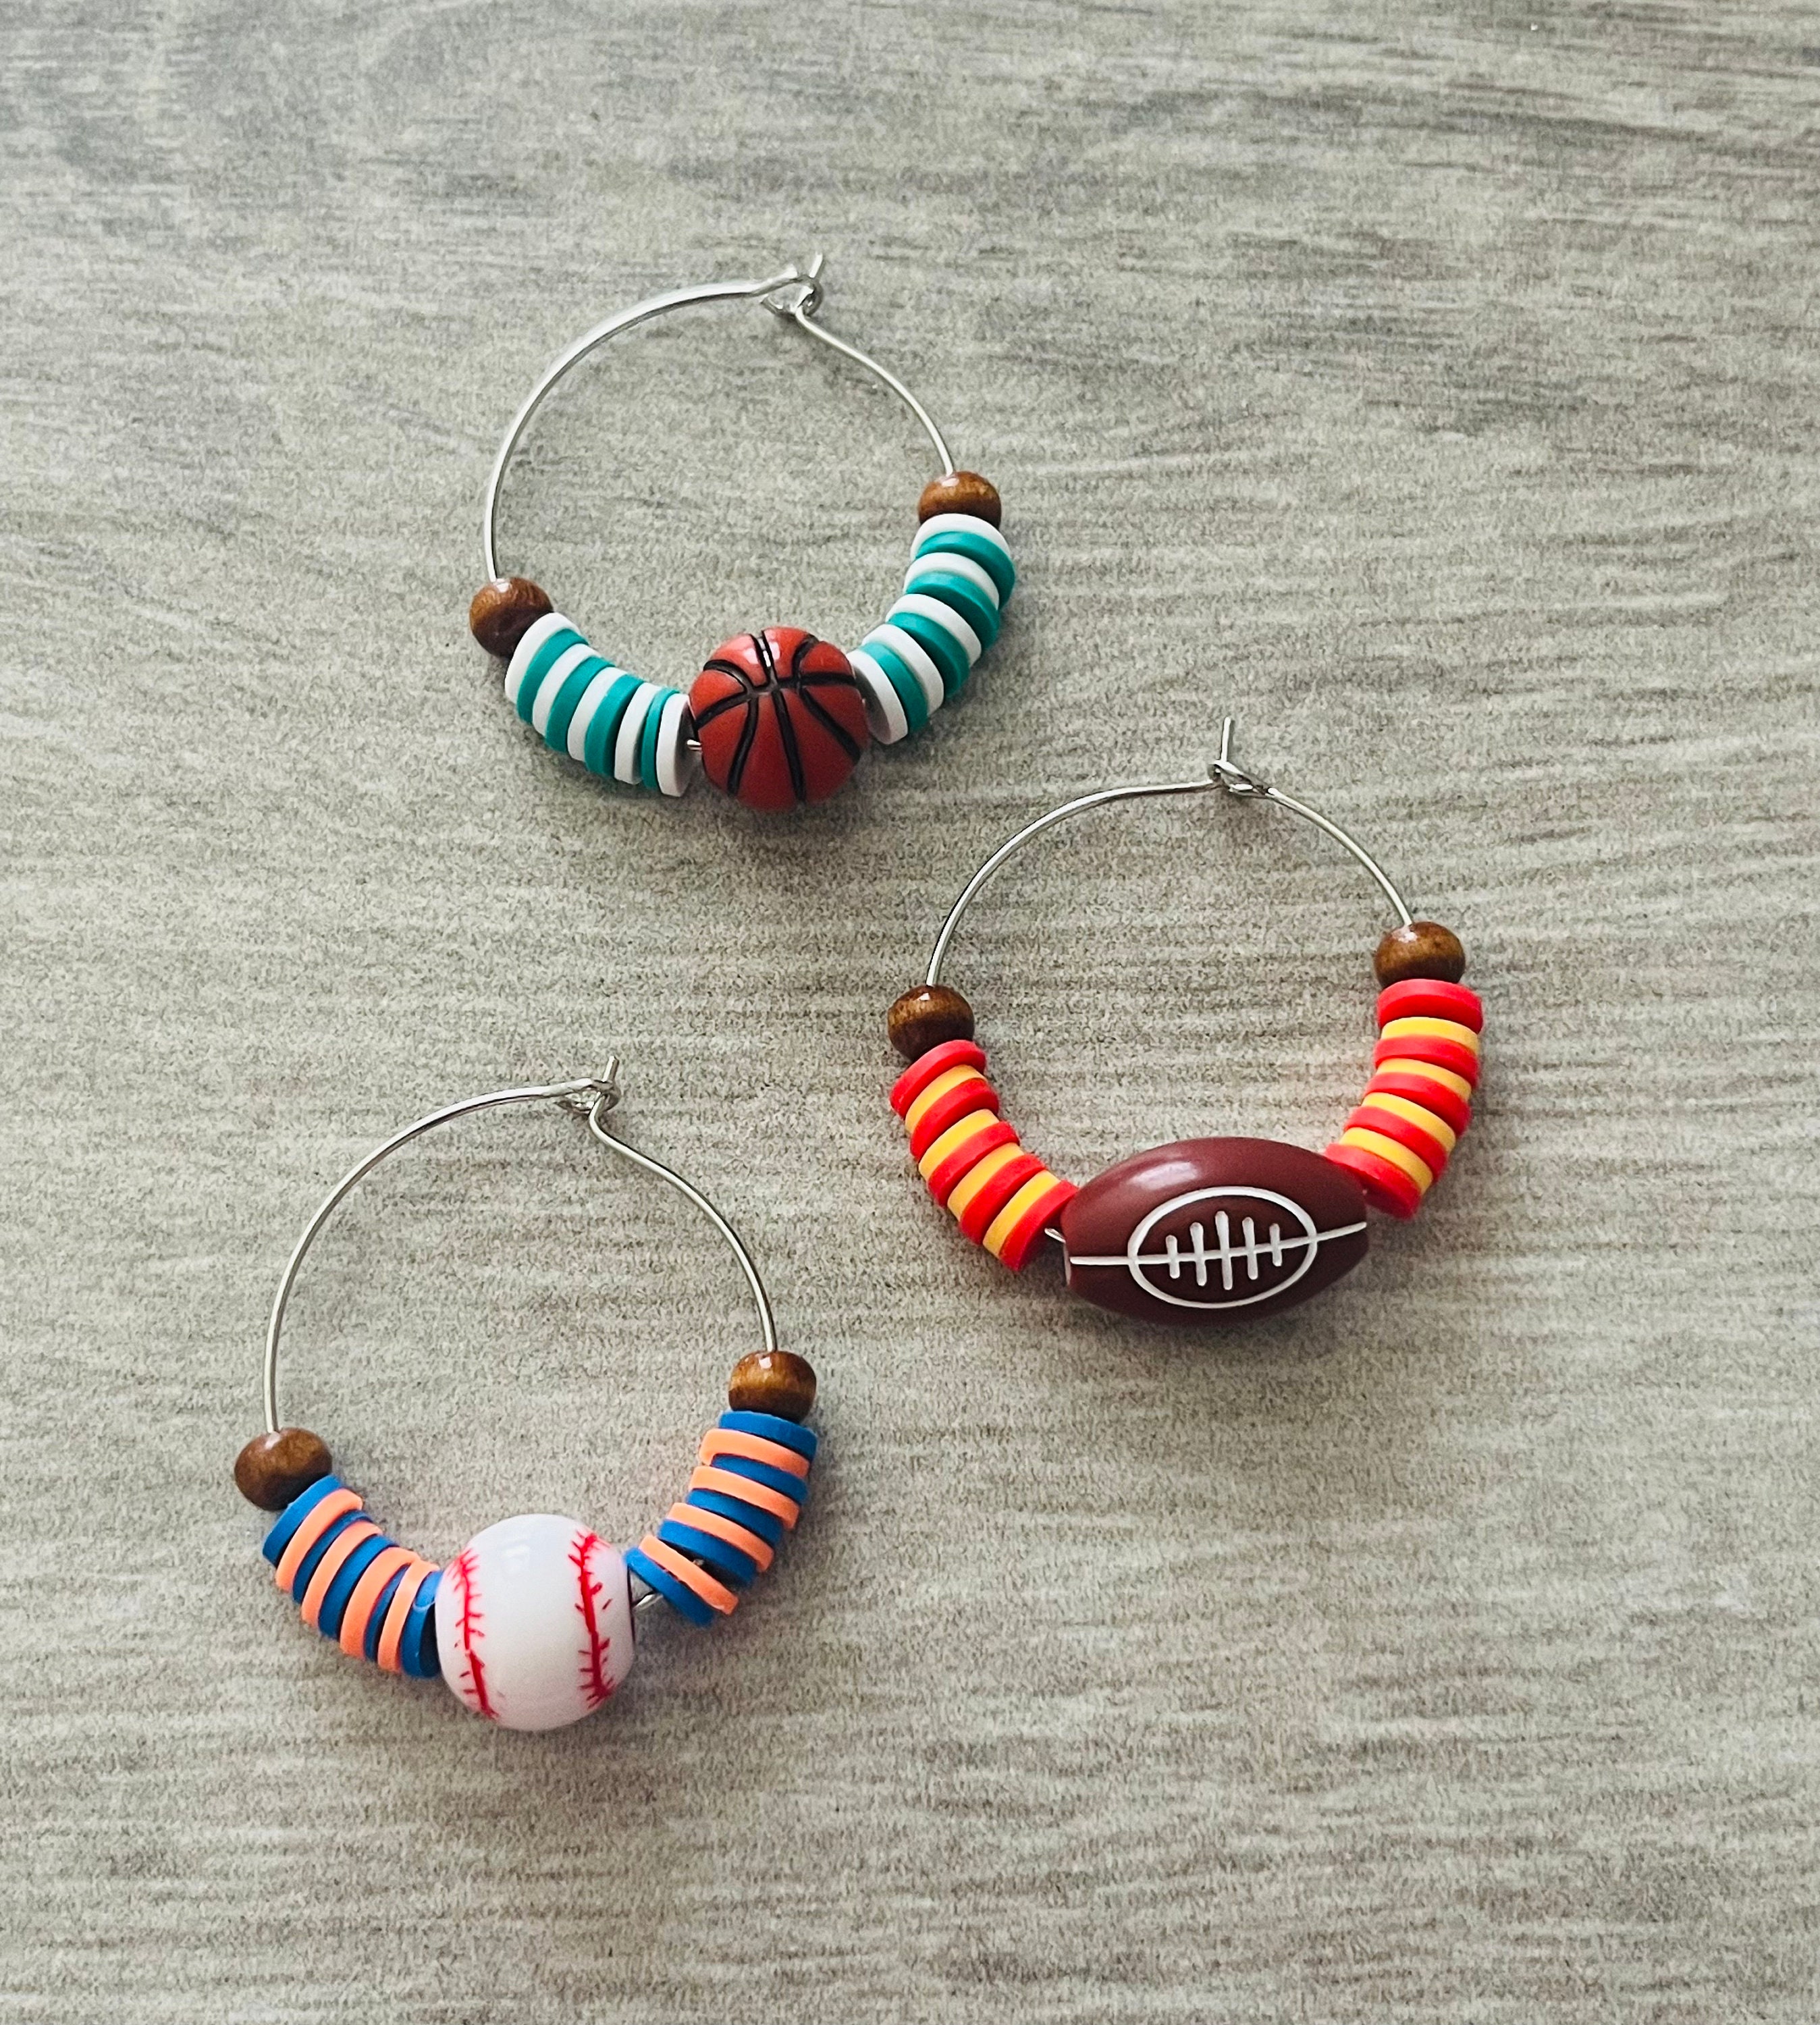 American Football Beads, Jewelry Making, 15mm Round Rugby Silicone Beads,  Football Beads, Bulk Beads, DIY Beaded Pen 